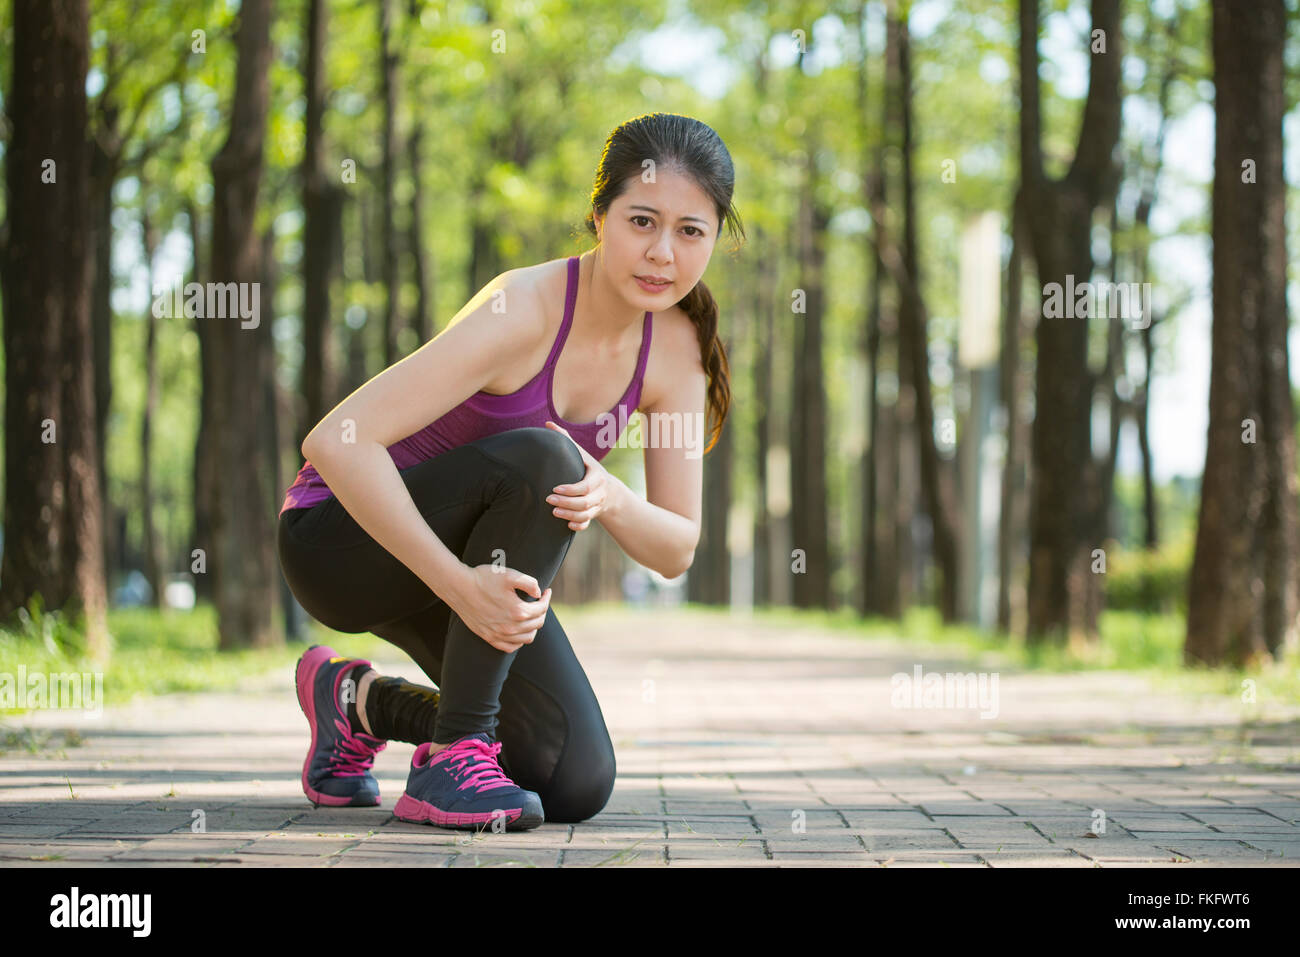 Asian woman runner hold Knee Pain ,Human Leg, jogging Stock Photo